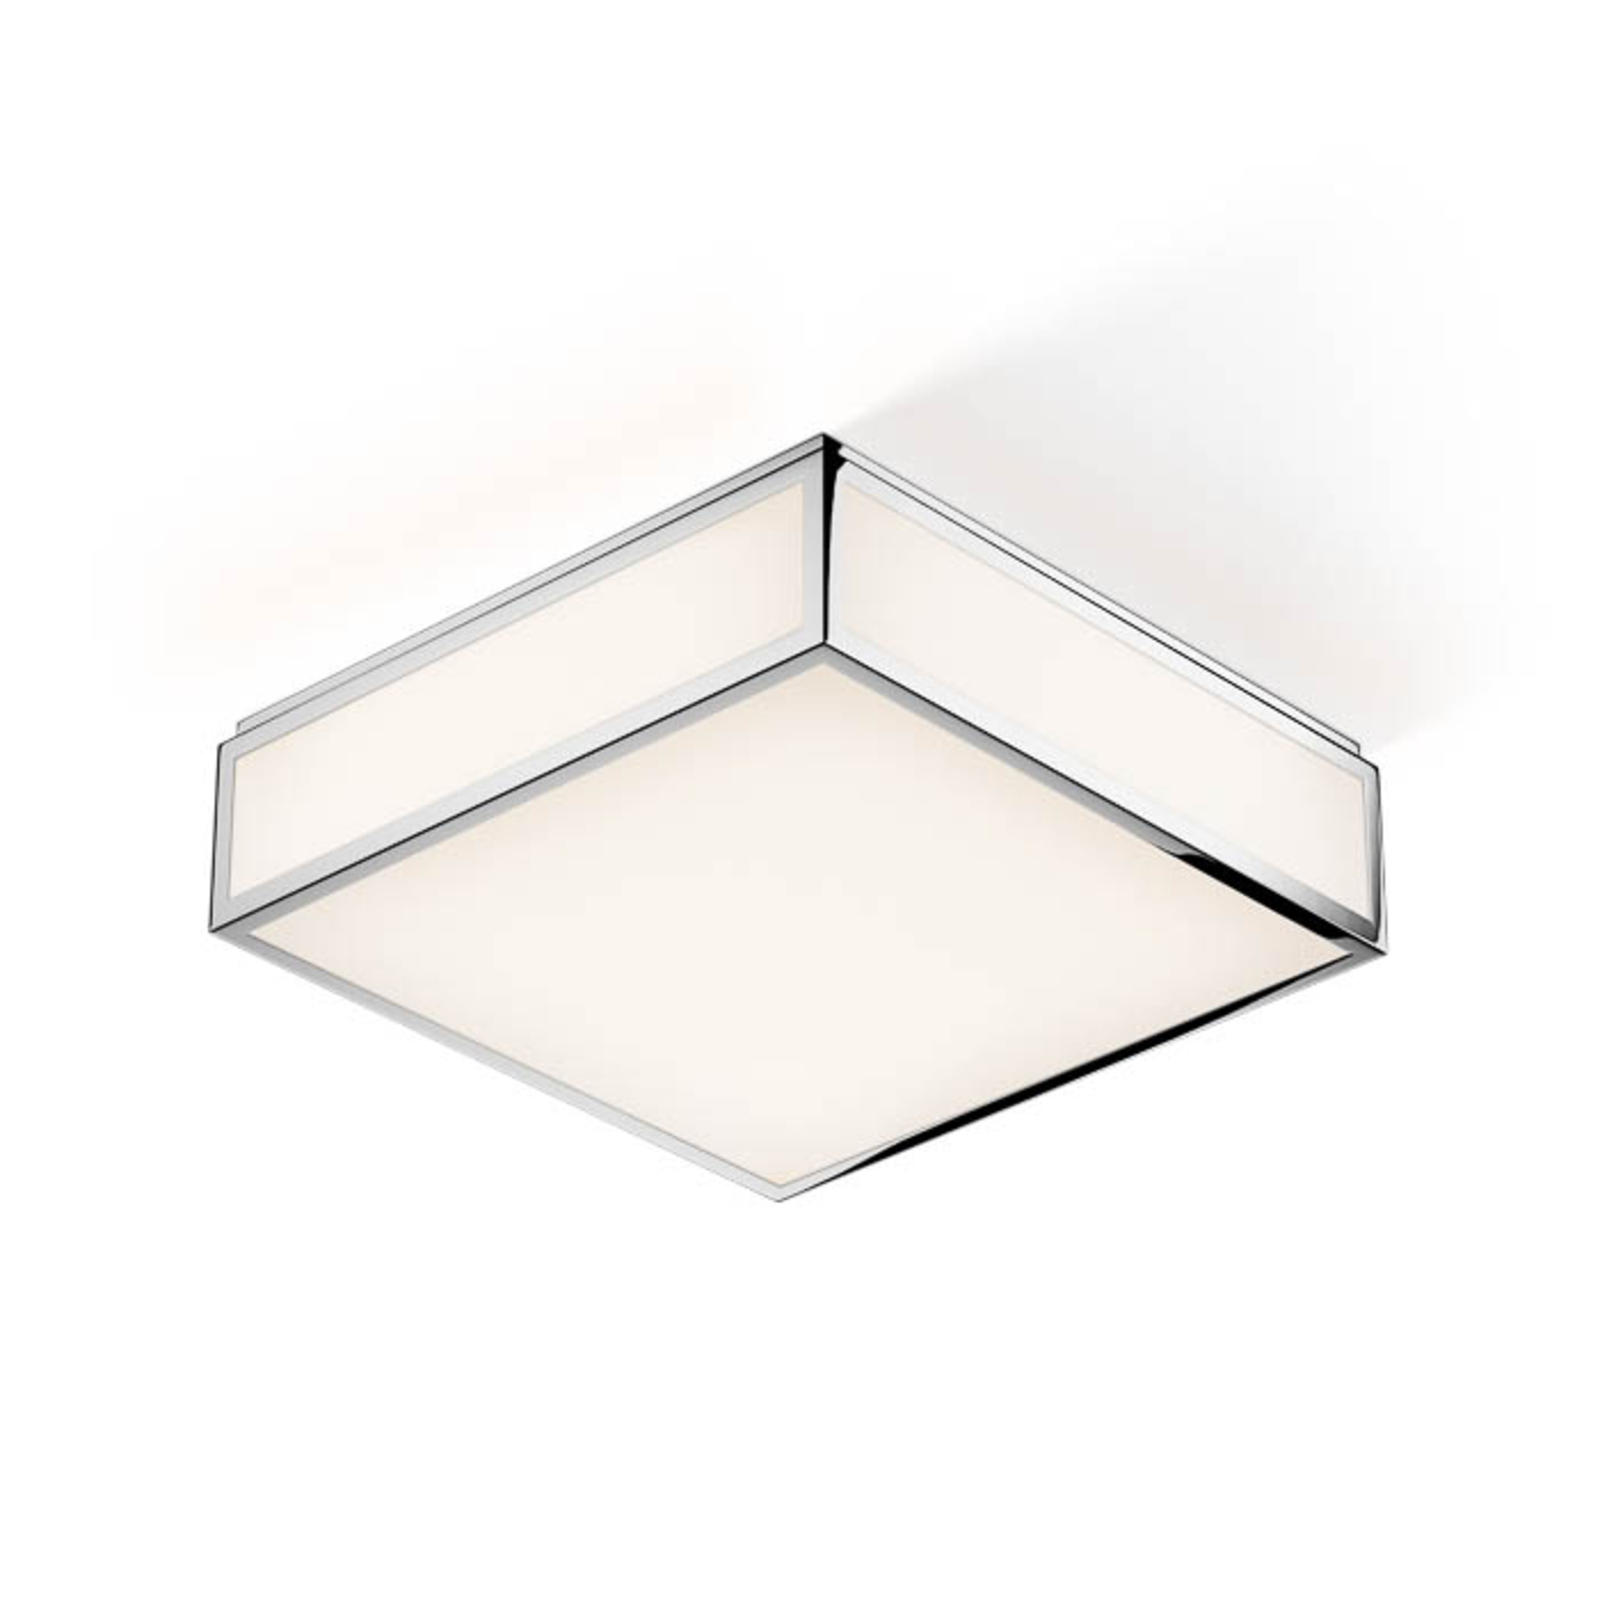 Decor Walther Bauhaus 3 N LED ceiling light chrome